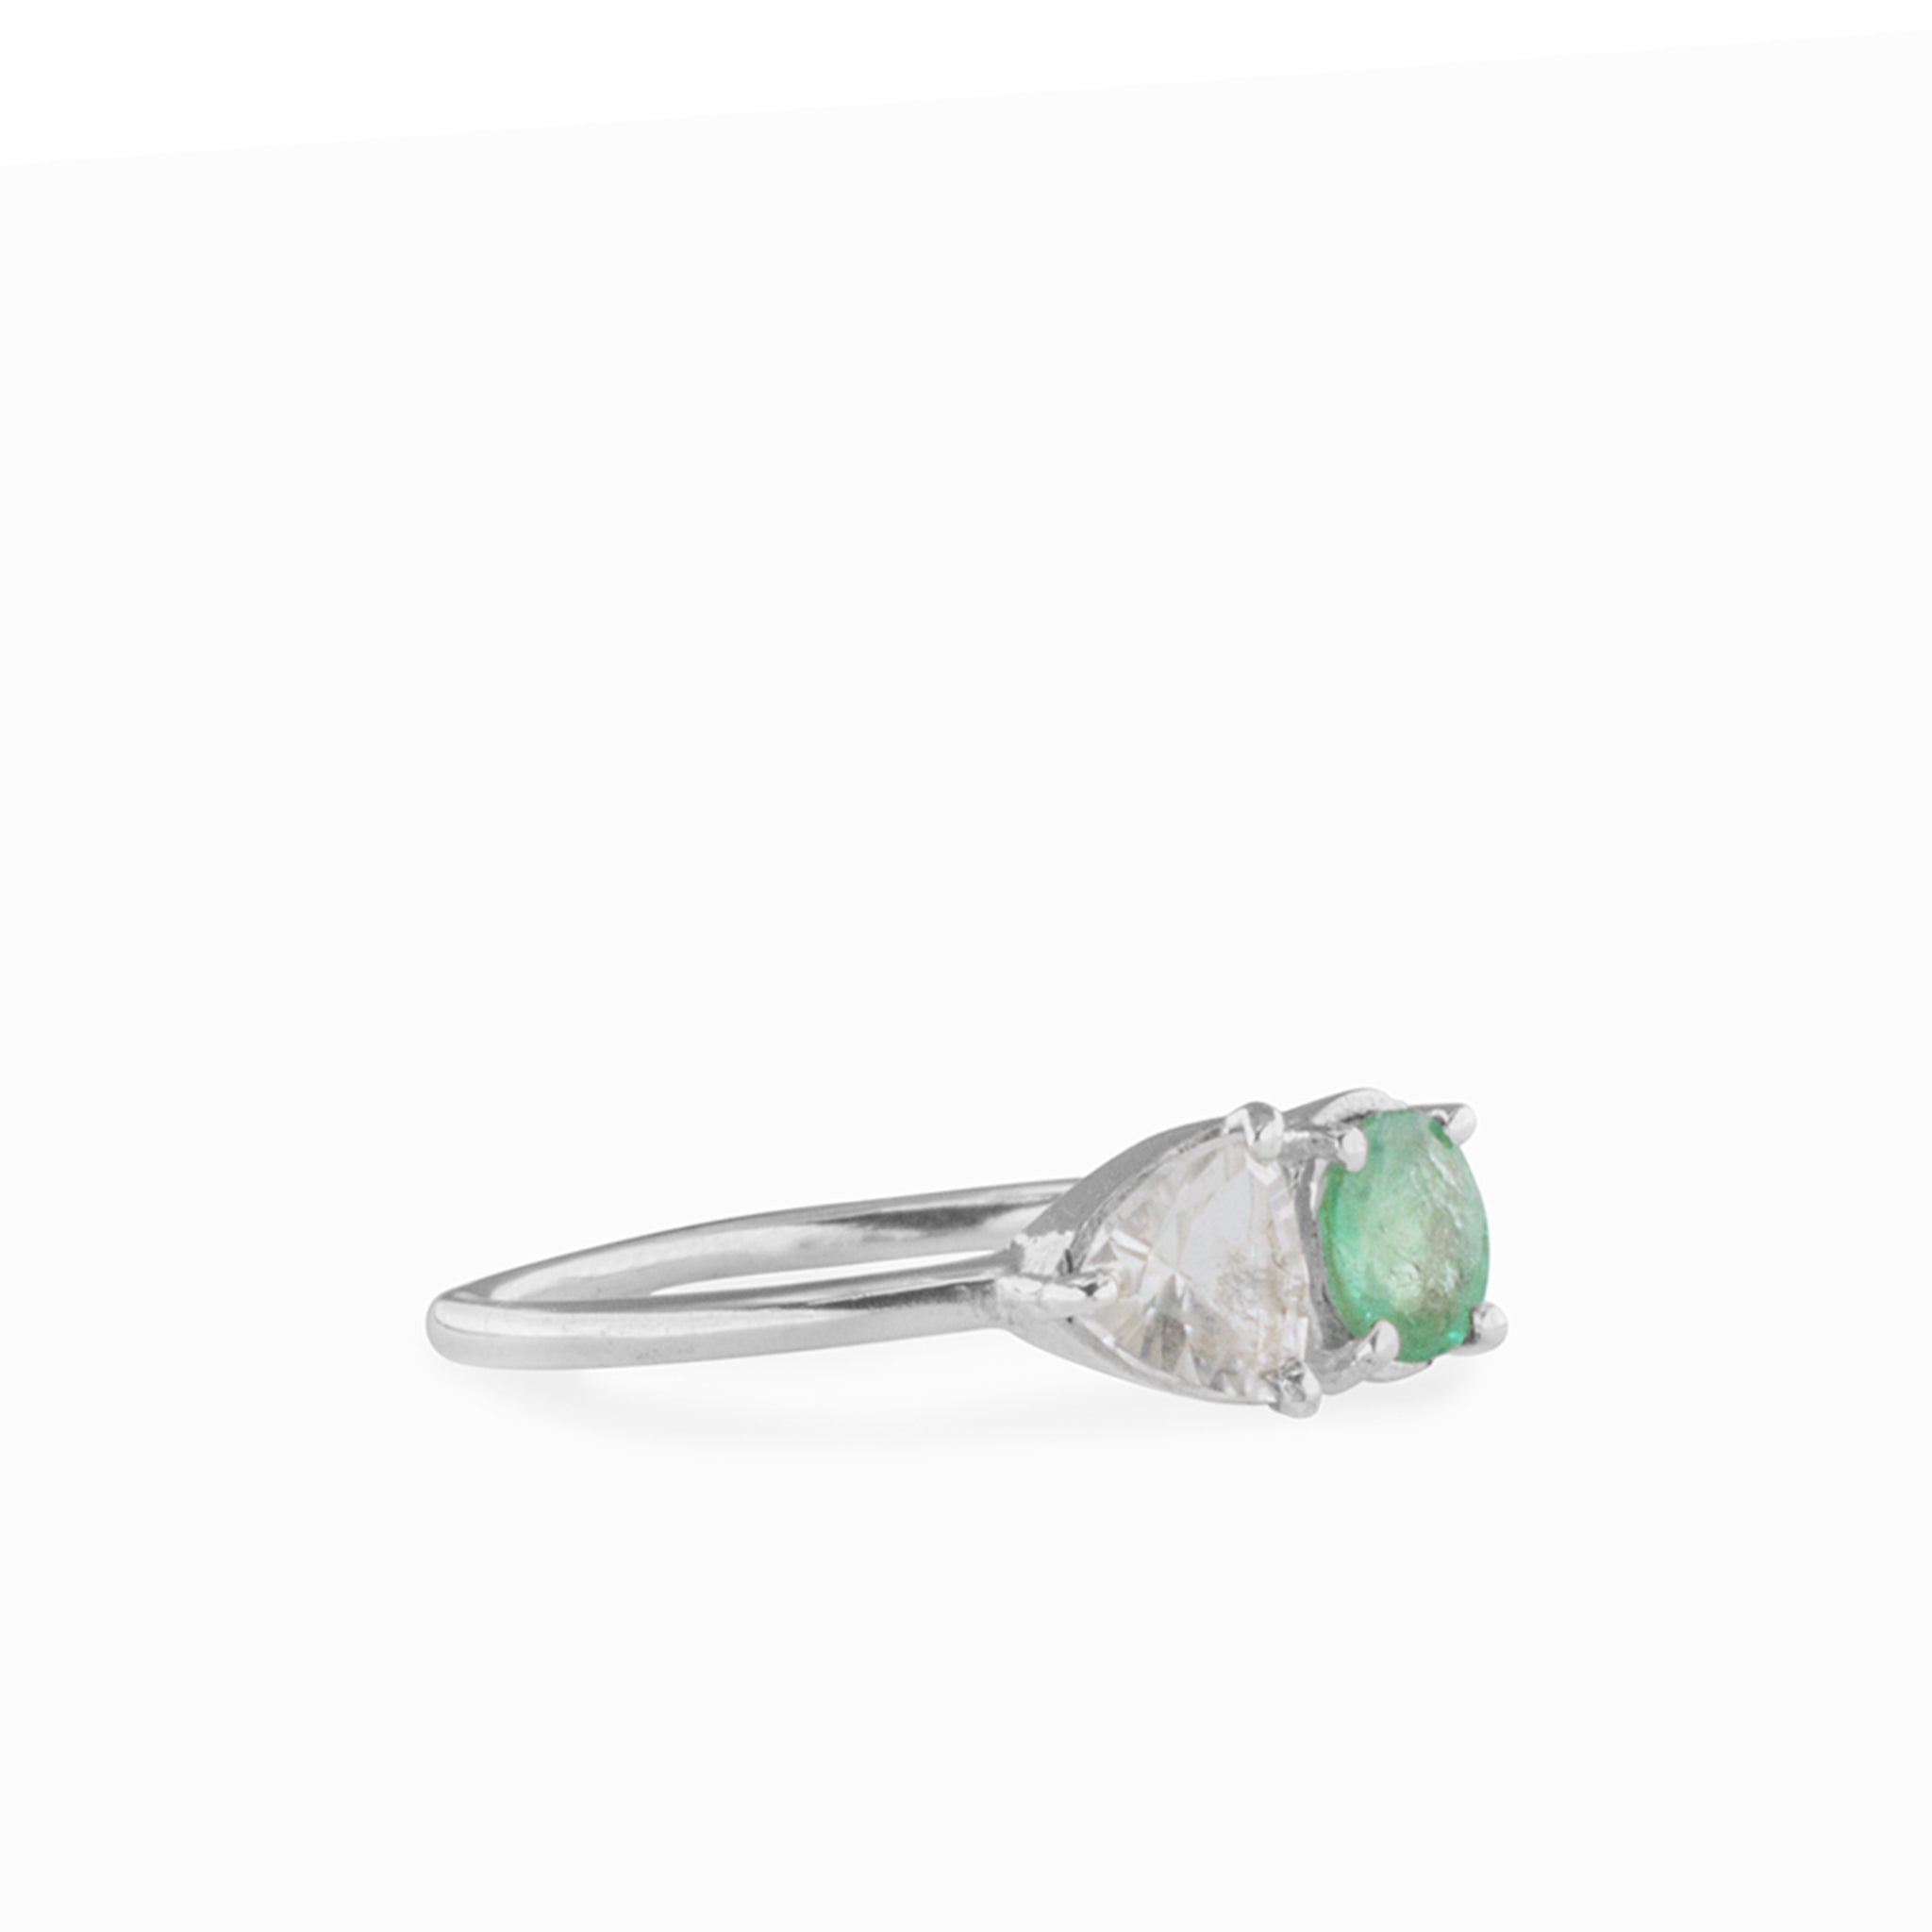 Emerald and Clear Quartz Ring